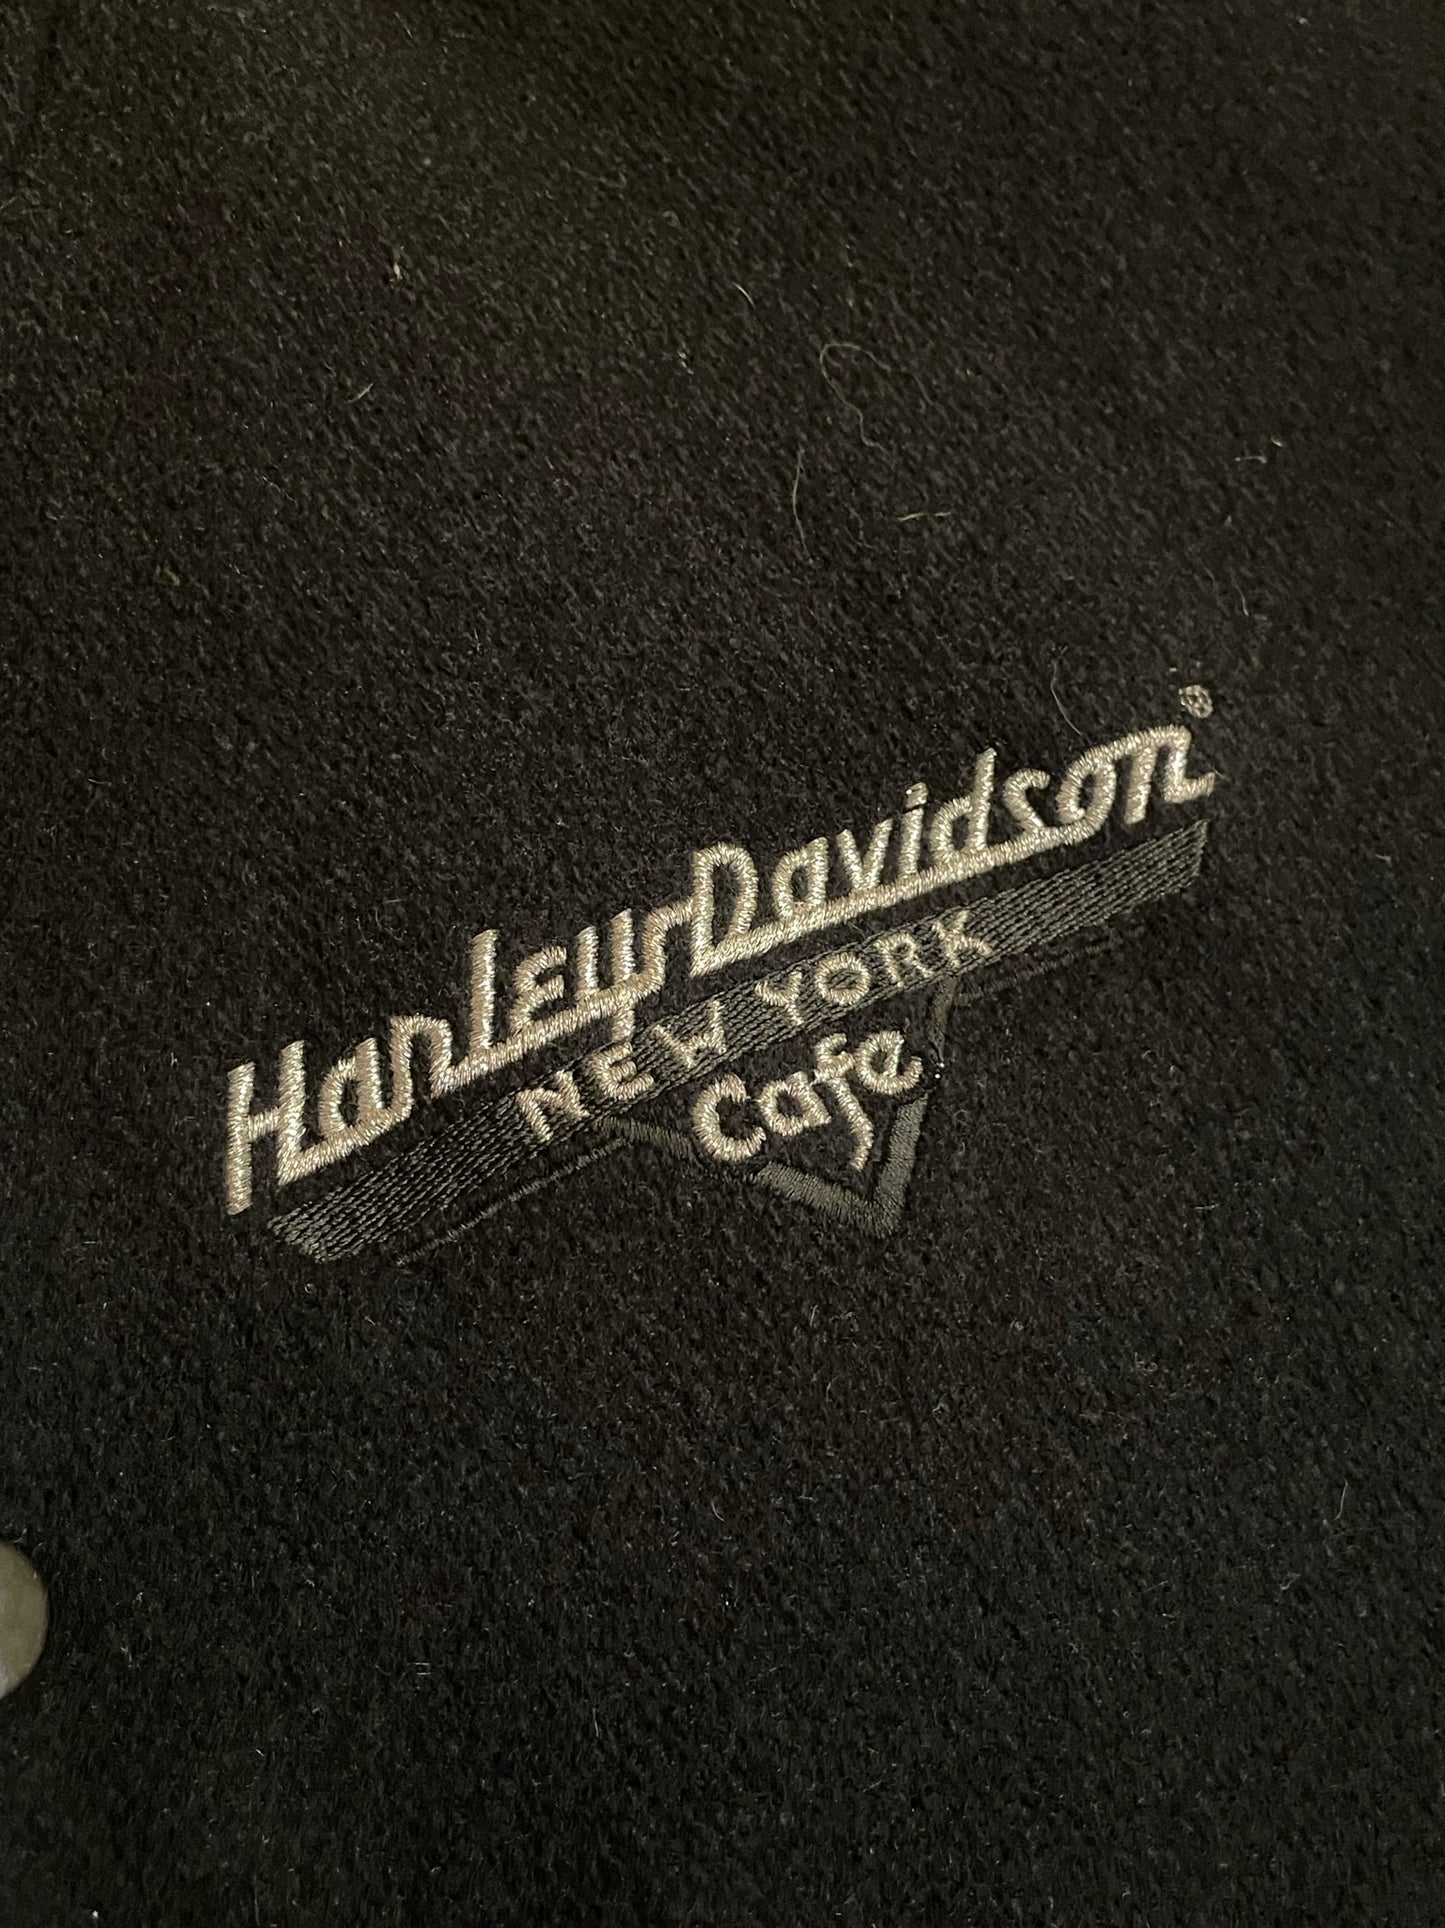 VINTAGE HARLEY DAVIDSON "NEW YORK CAFE" VARSITY JACKET SZ: L